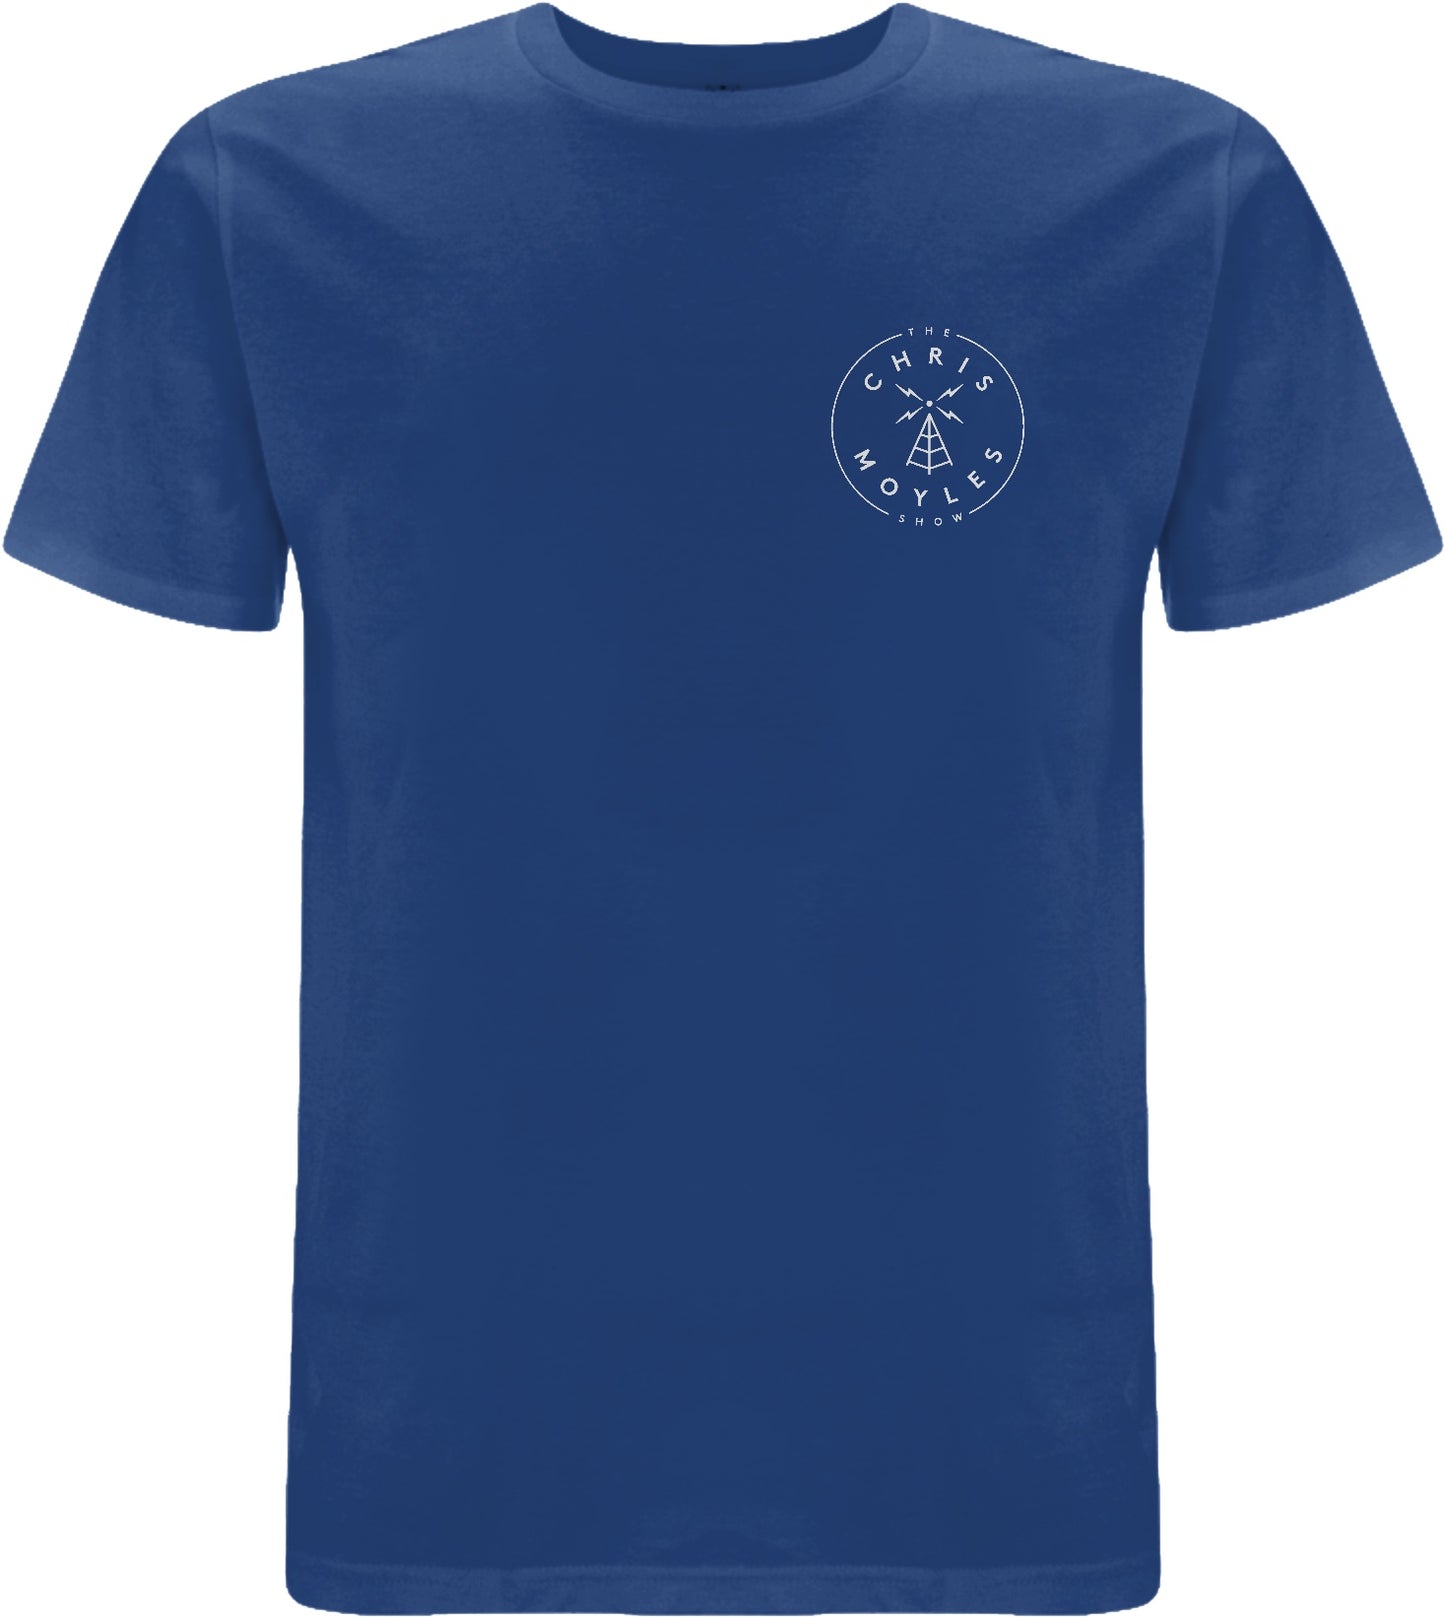 'The Chris Moyles Show' Small Print T-Shirt - 'Royal'